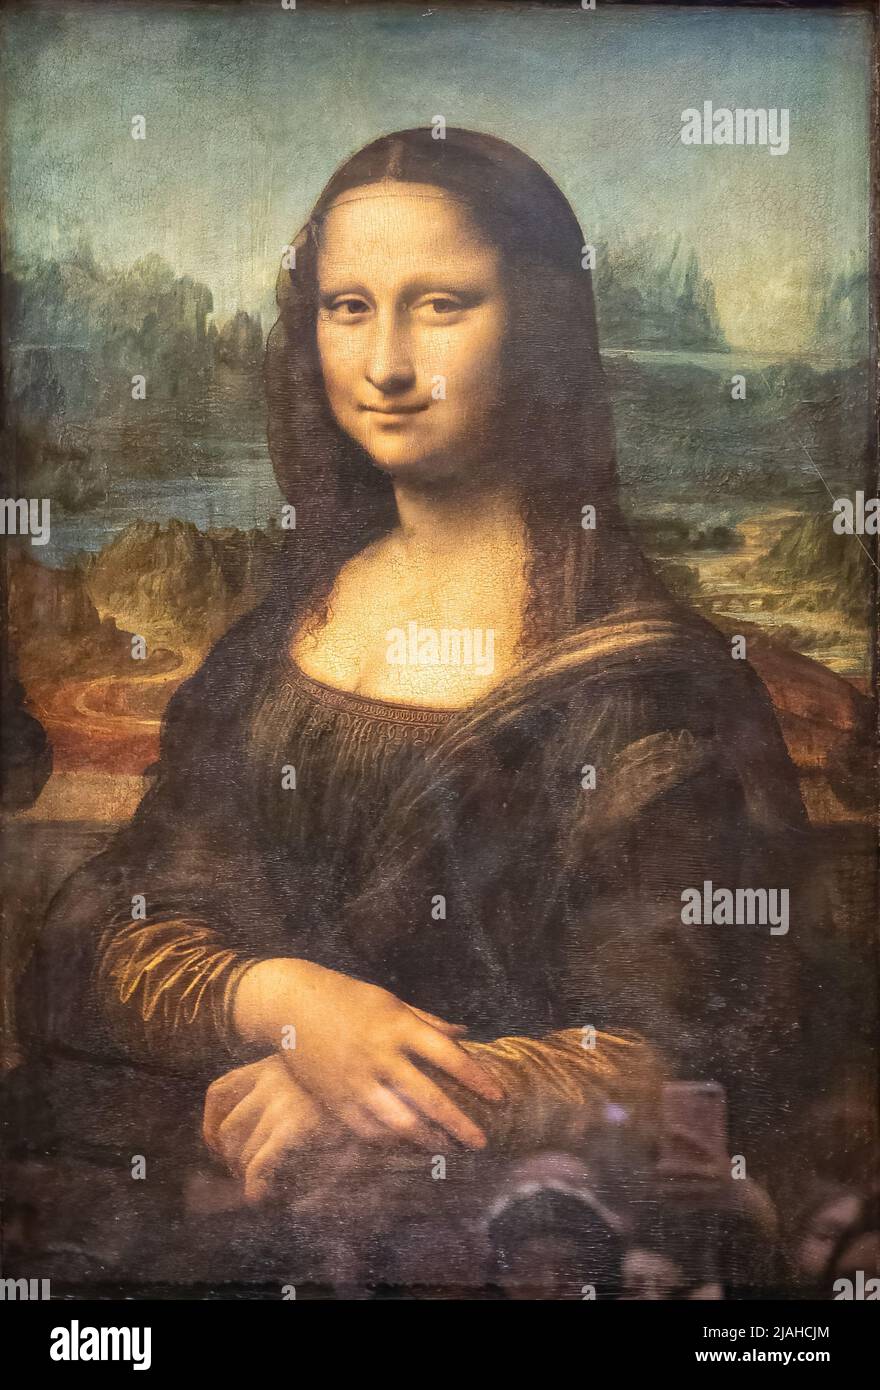 Mona lisa dibujo fotografías e imágenes de alta resolución - Alamy